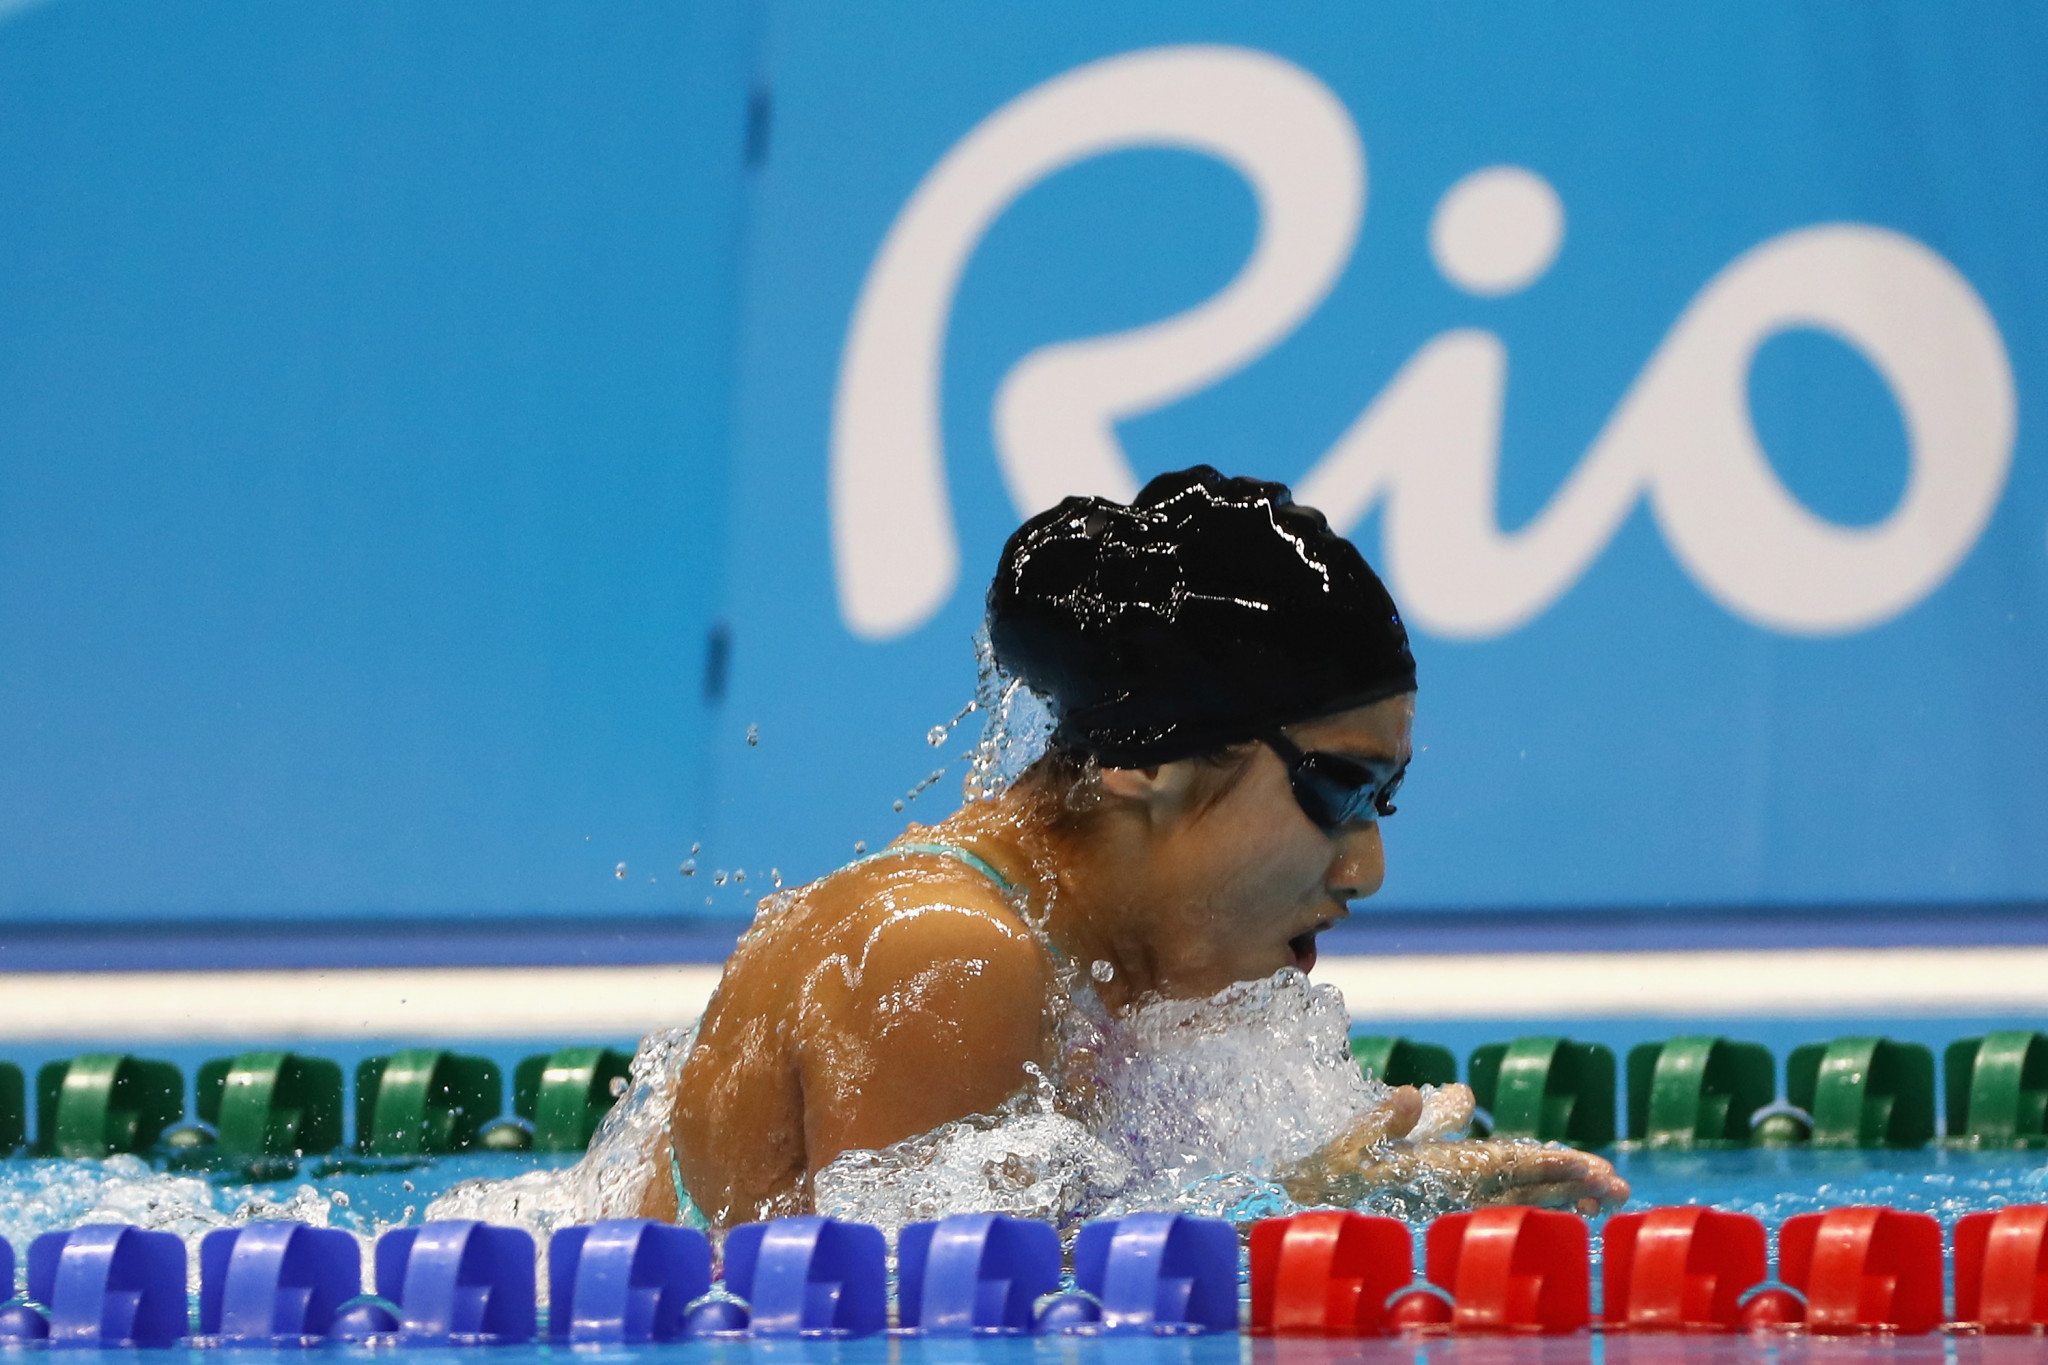 Uzbekistan's Amilova Fotimakhon set two swimming world records at the Asian Para Games ©Getty Images